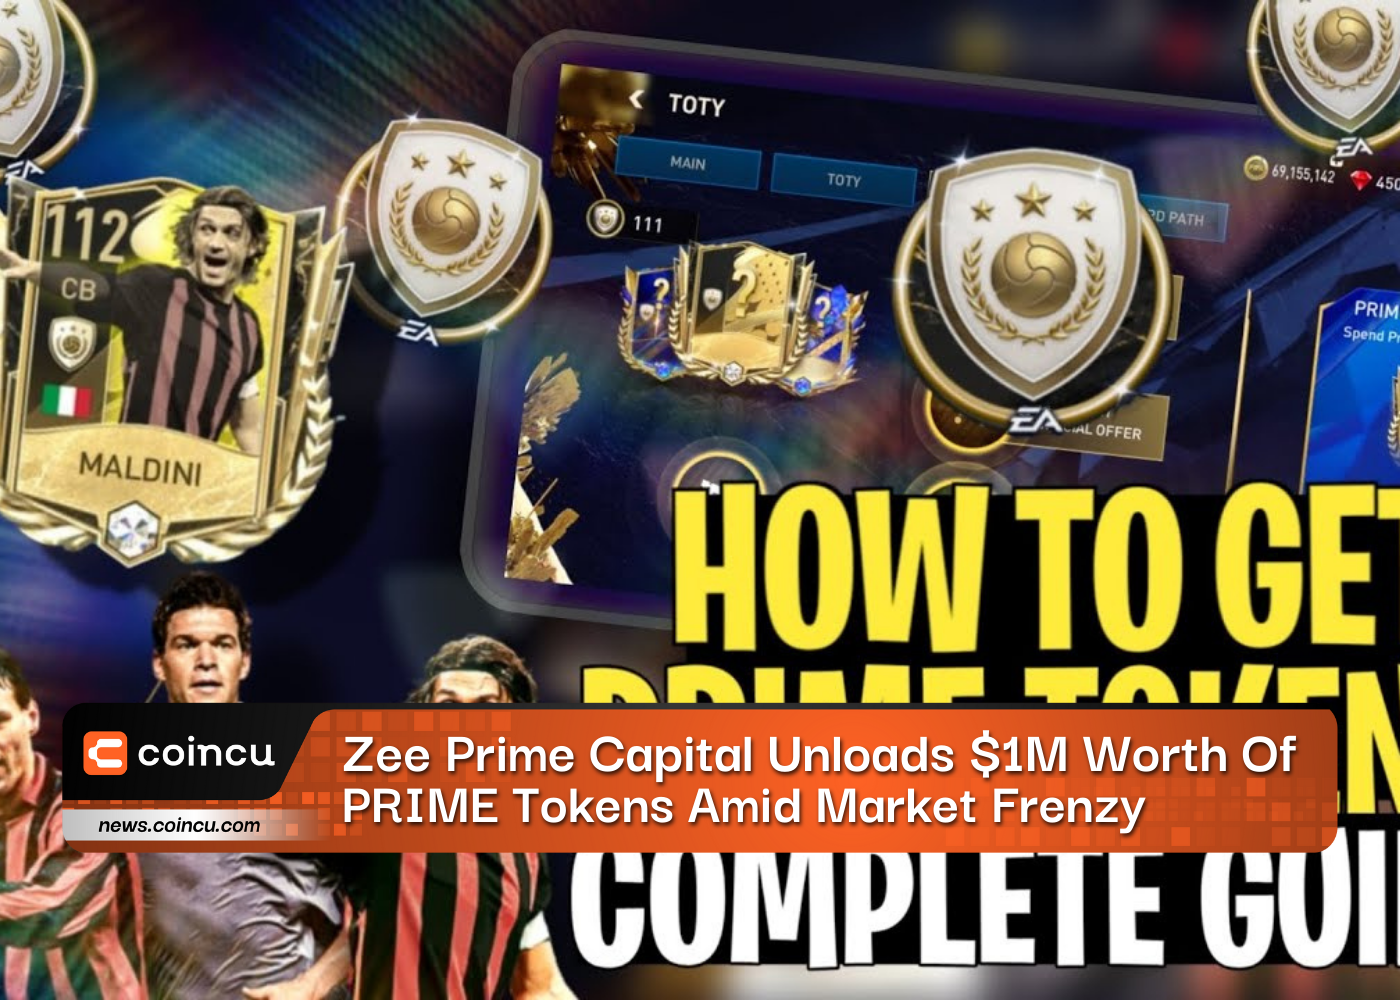 Zee Prime Capital Unloads 1M Worth Of